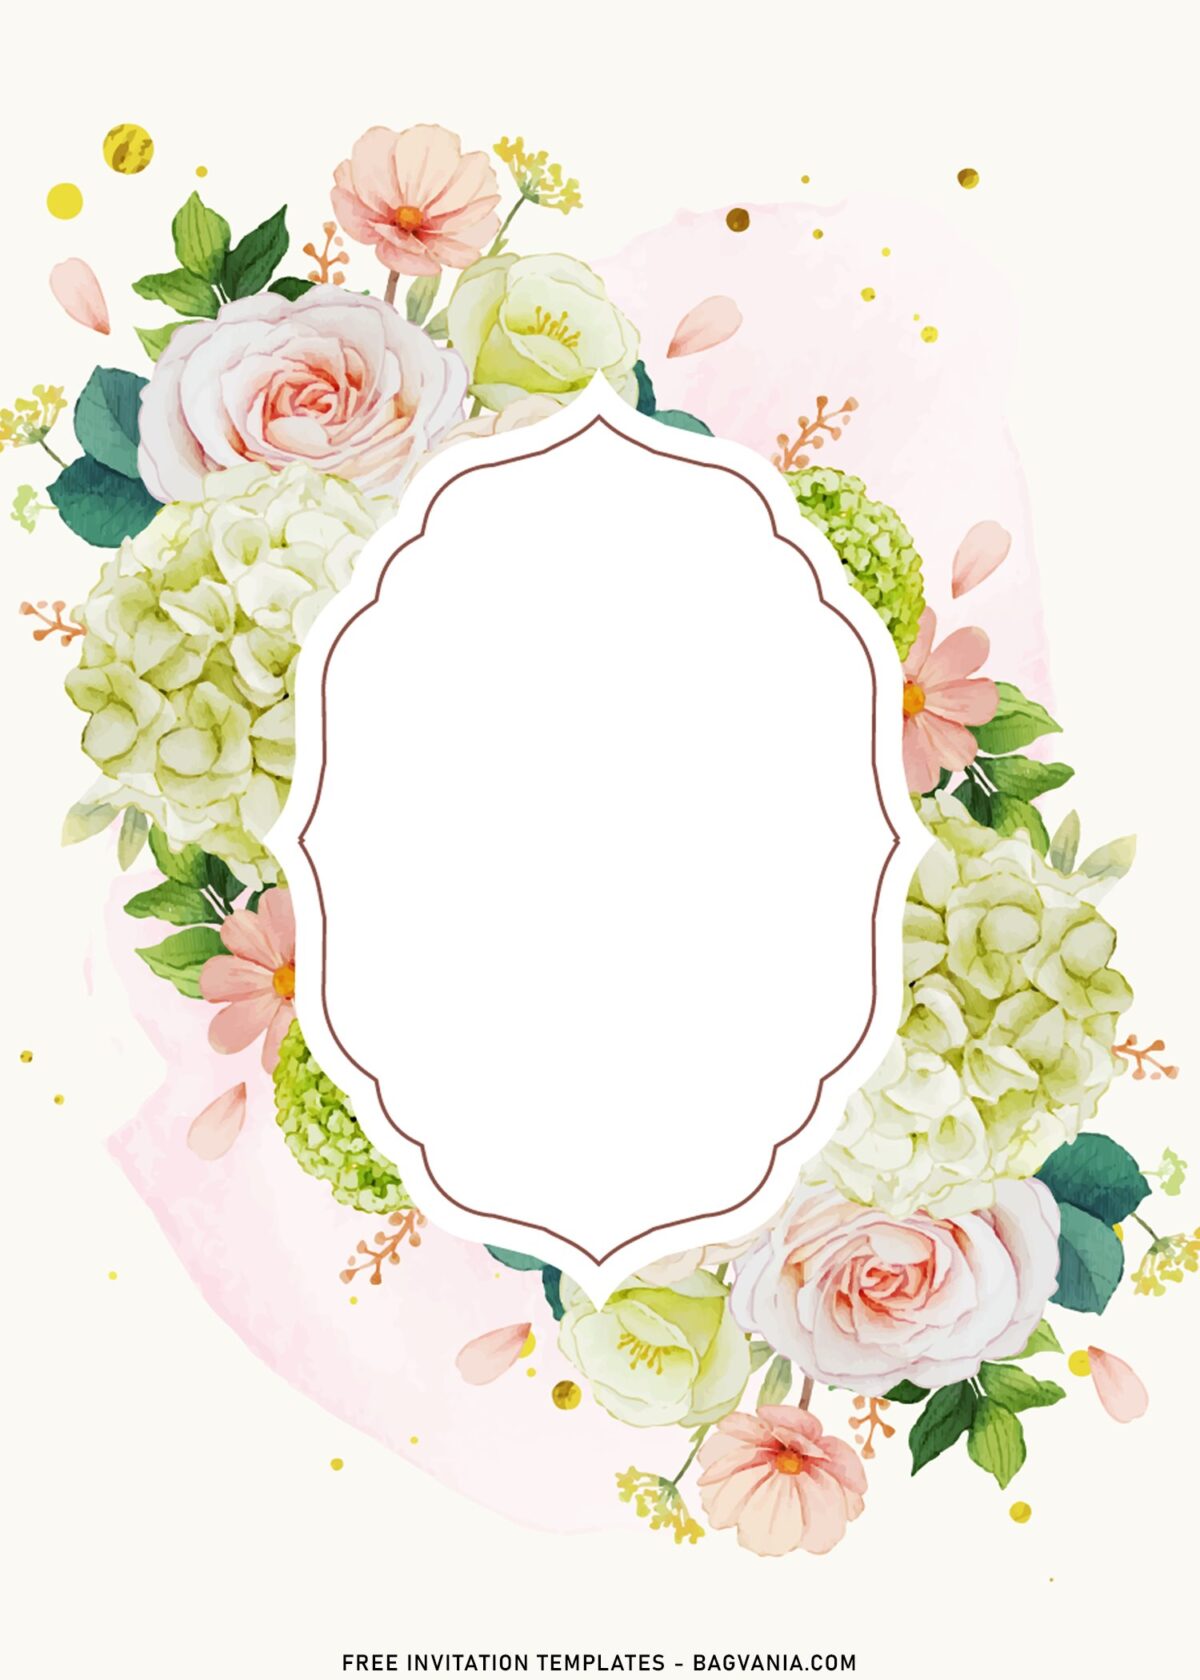 10+ Beautiful Blush And Peach Roses Birthday Invitation Templates with elegant text box